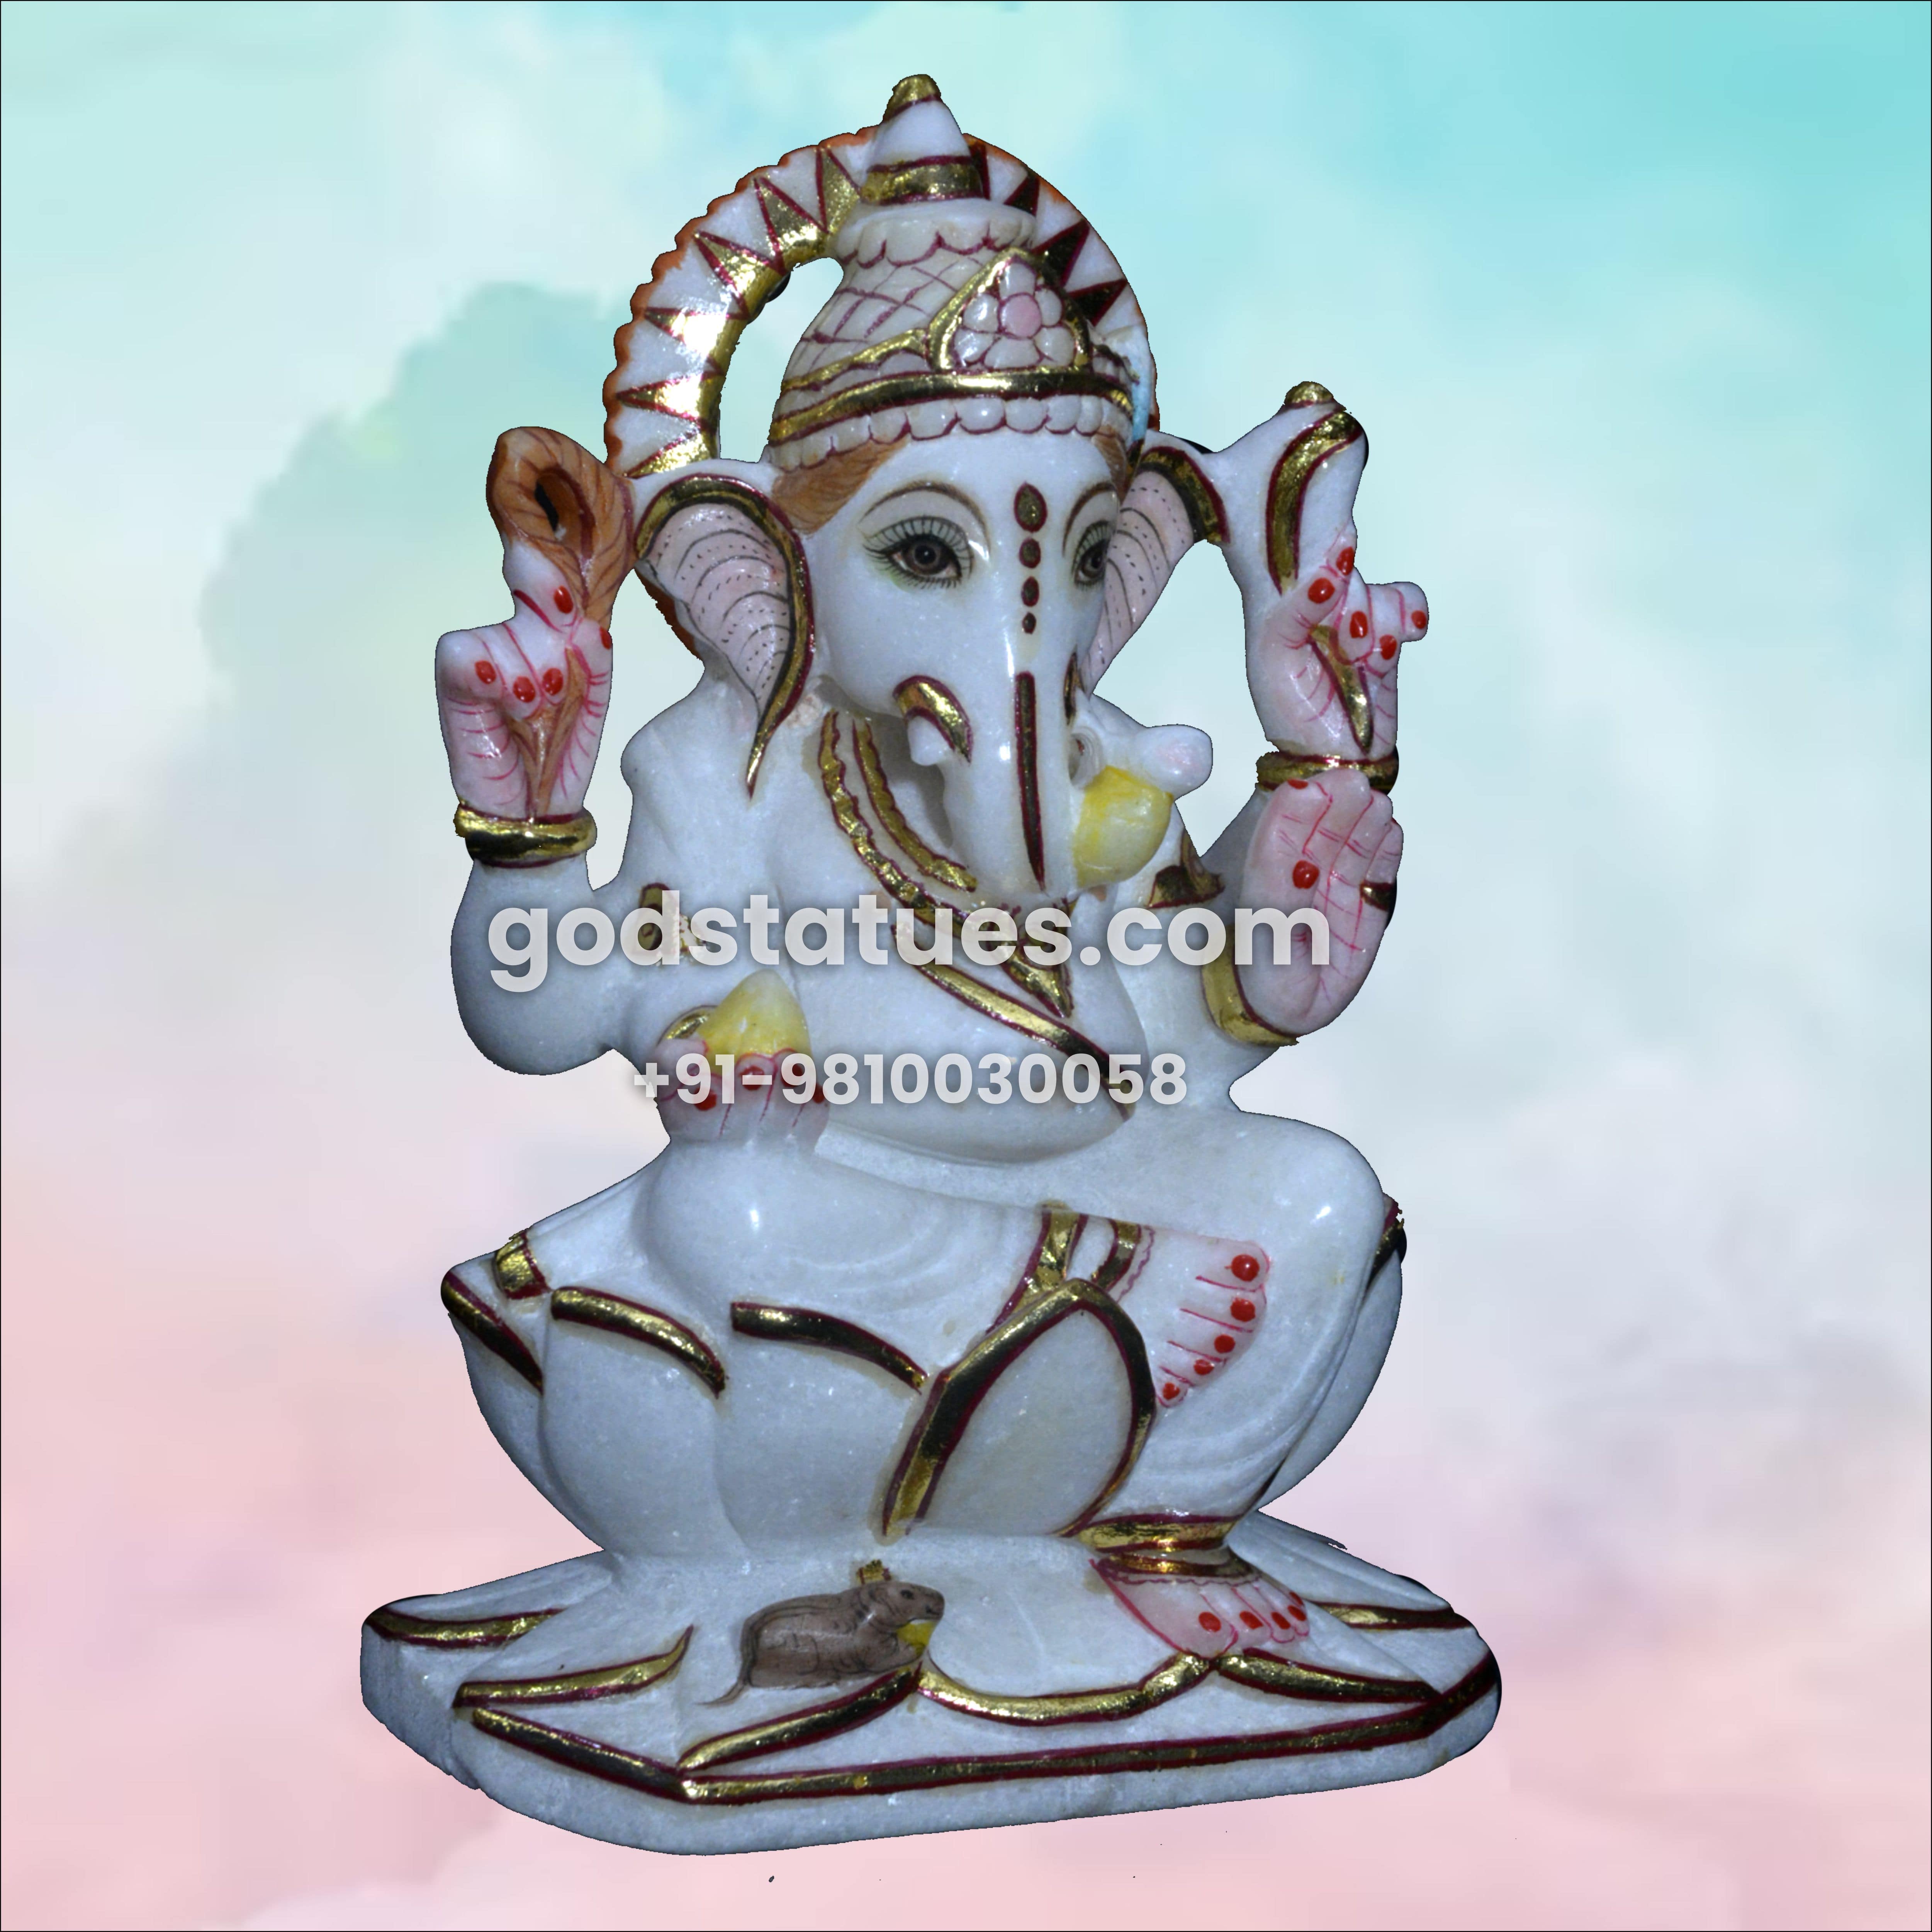 Ganesha Marble Statue sitting on Lotus God Statues 2